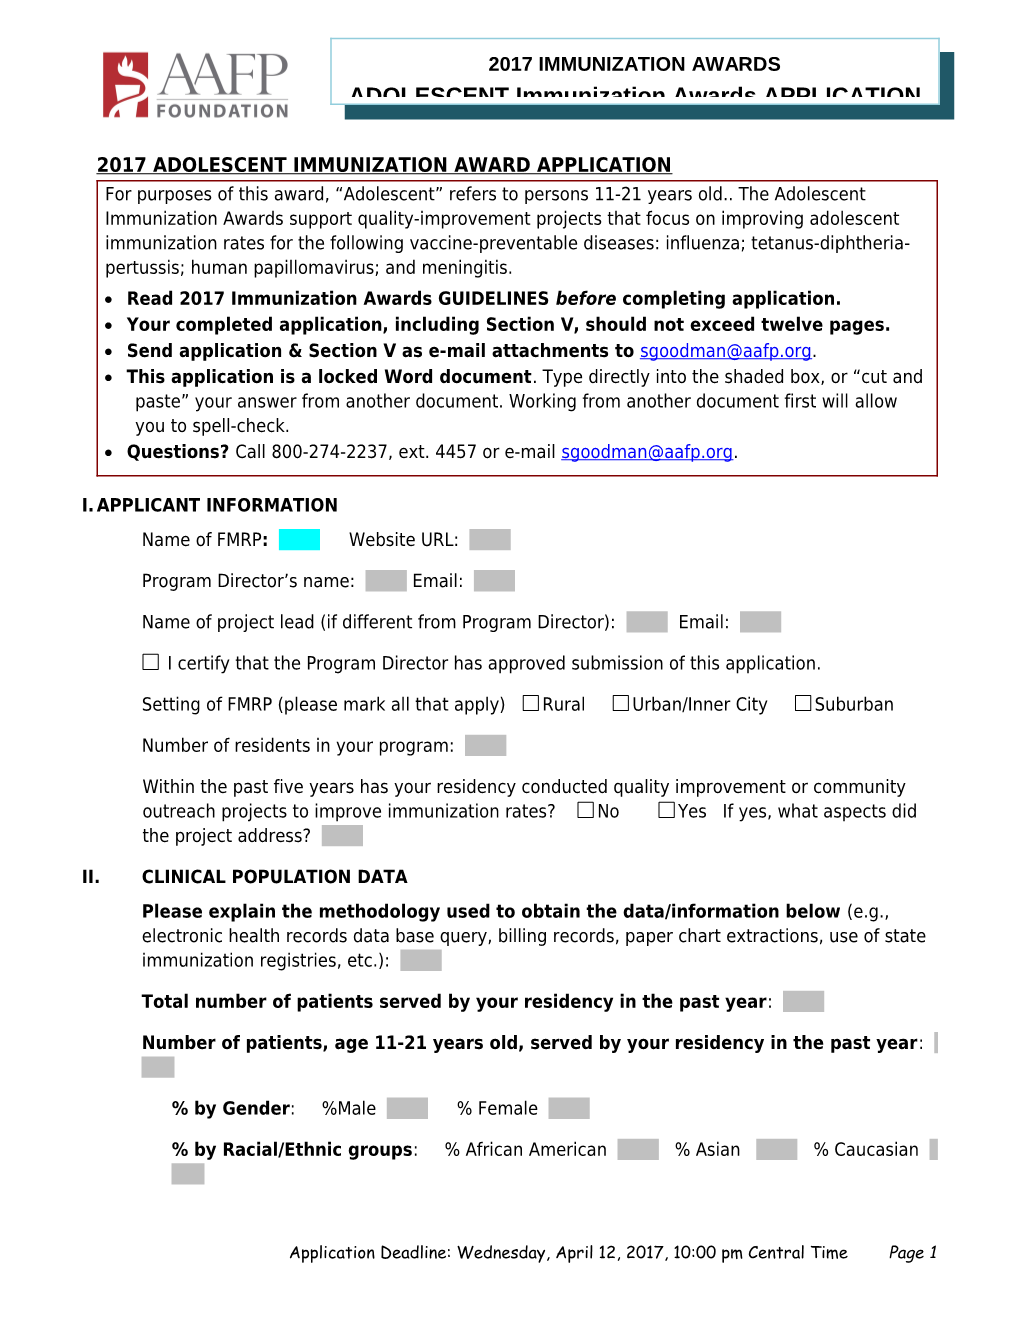 2017Adolescent Immunization Award Application